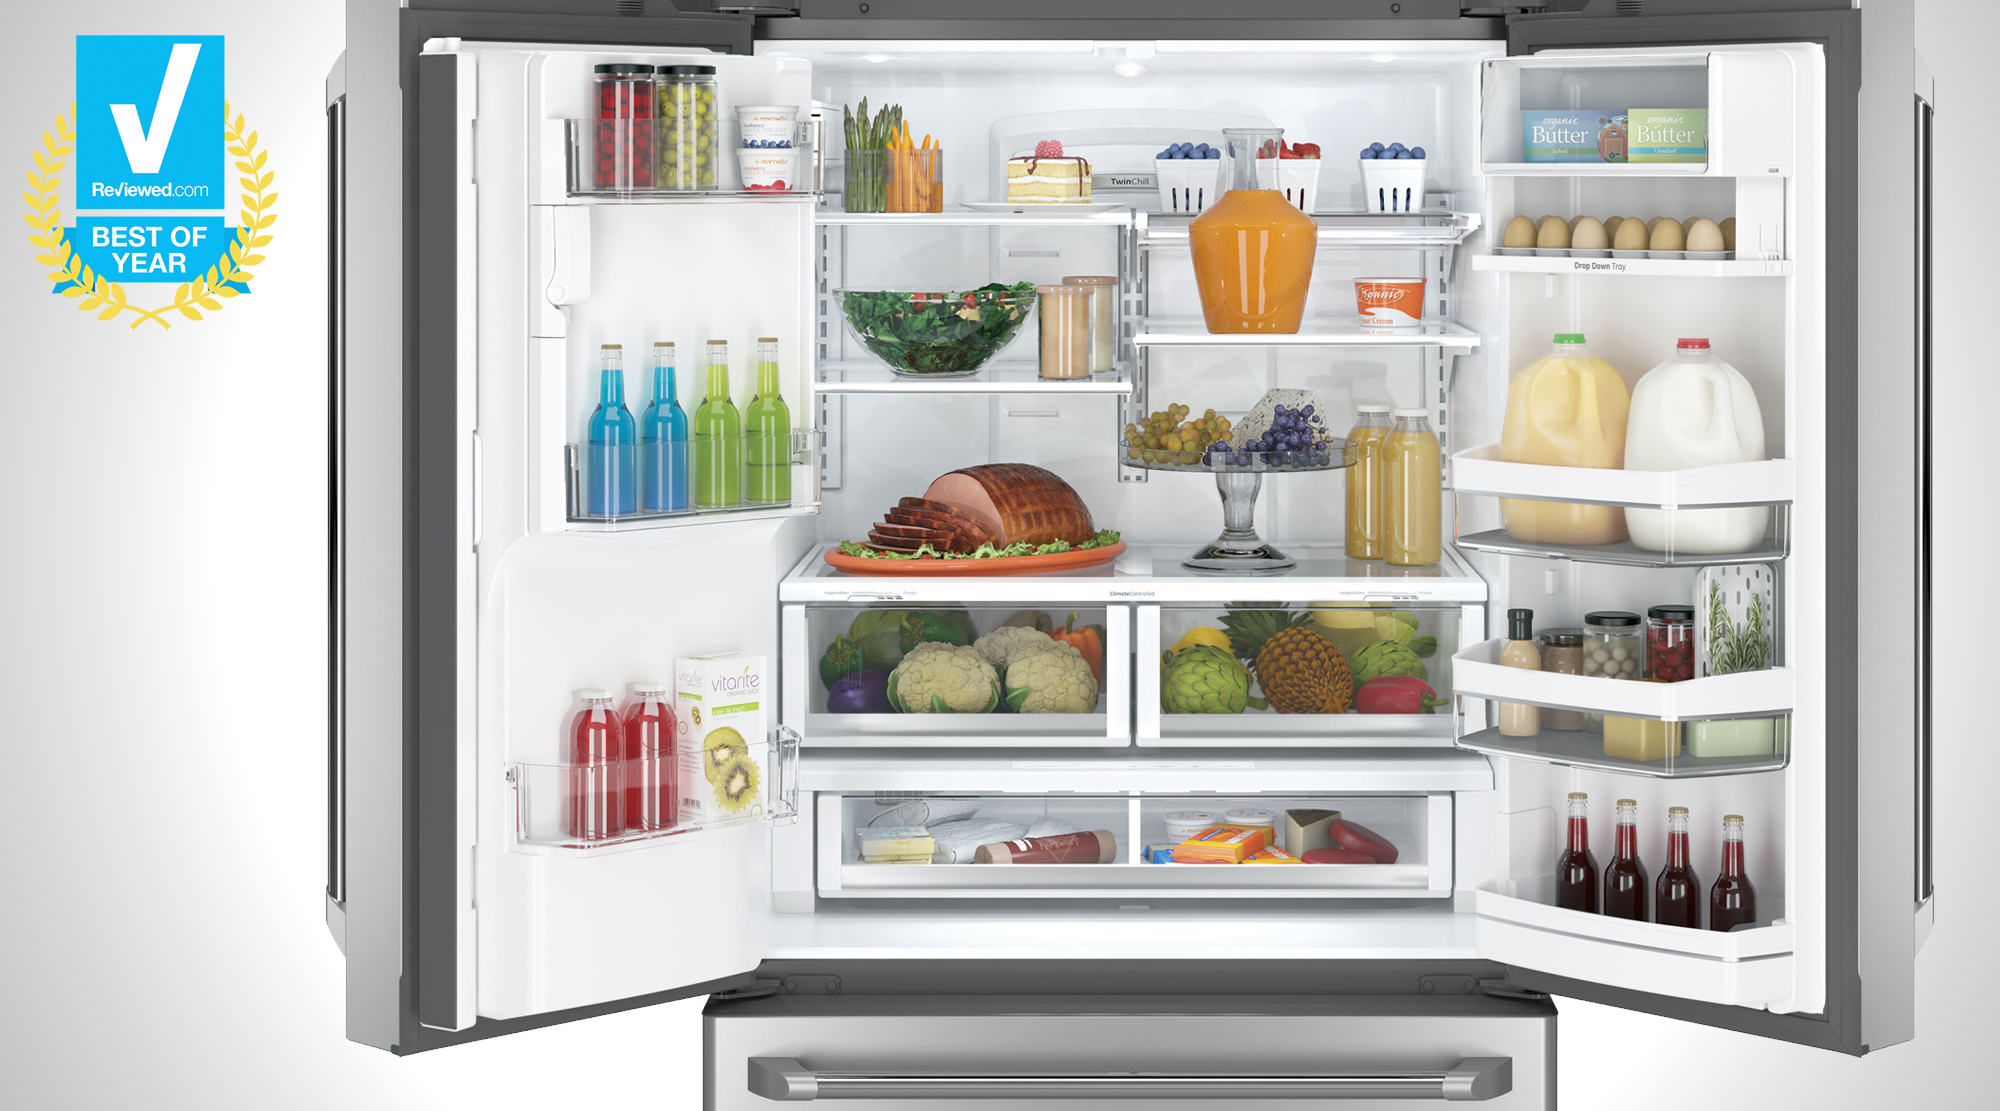 best-refrigerators-of-2016-reviewed-refrigerators-reviewed